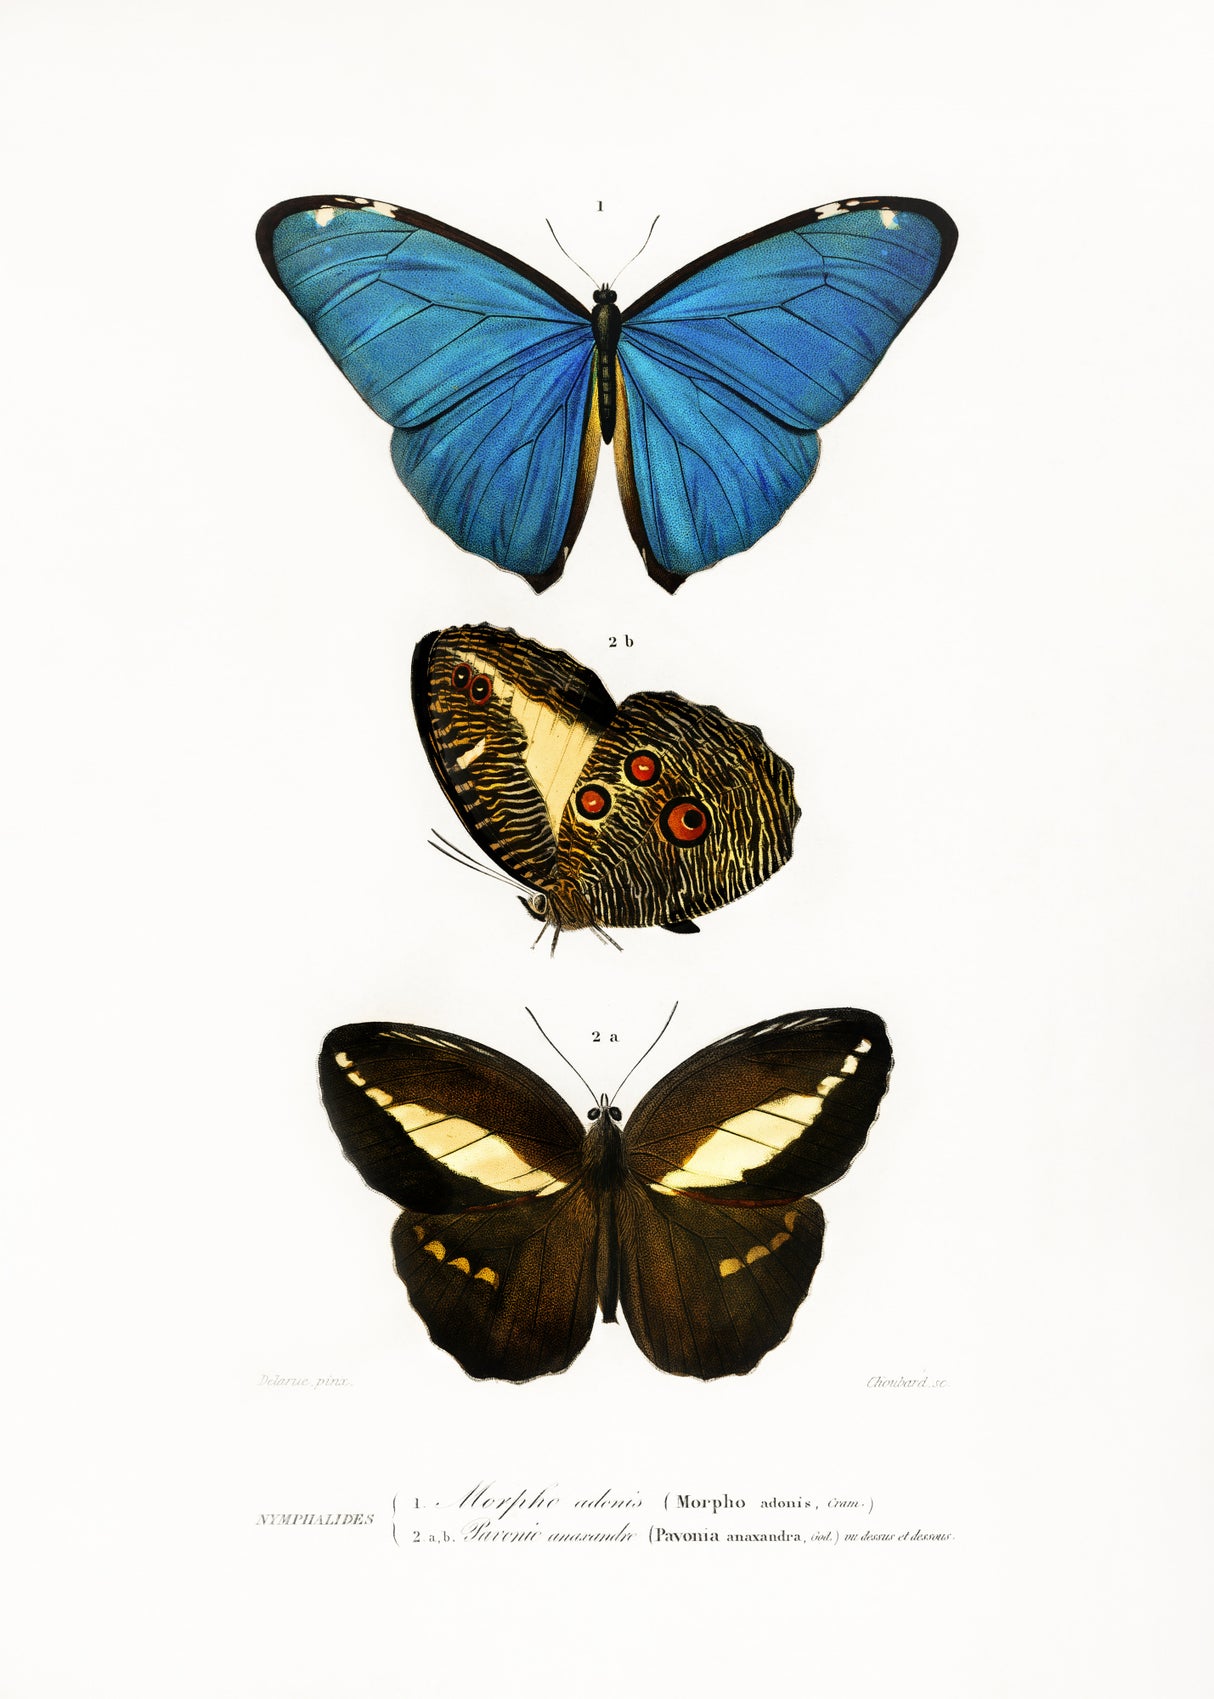 Different Types of Butterflies II Poster och Canvastavla